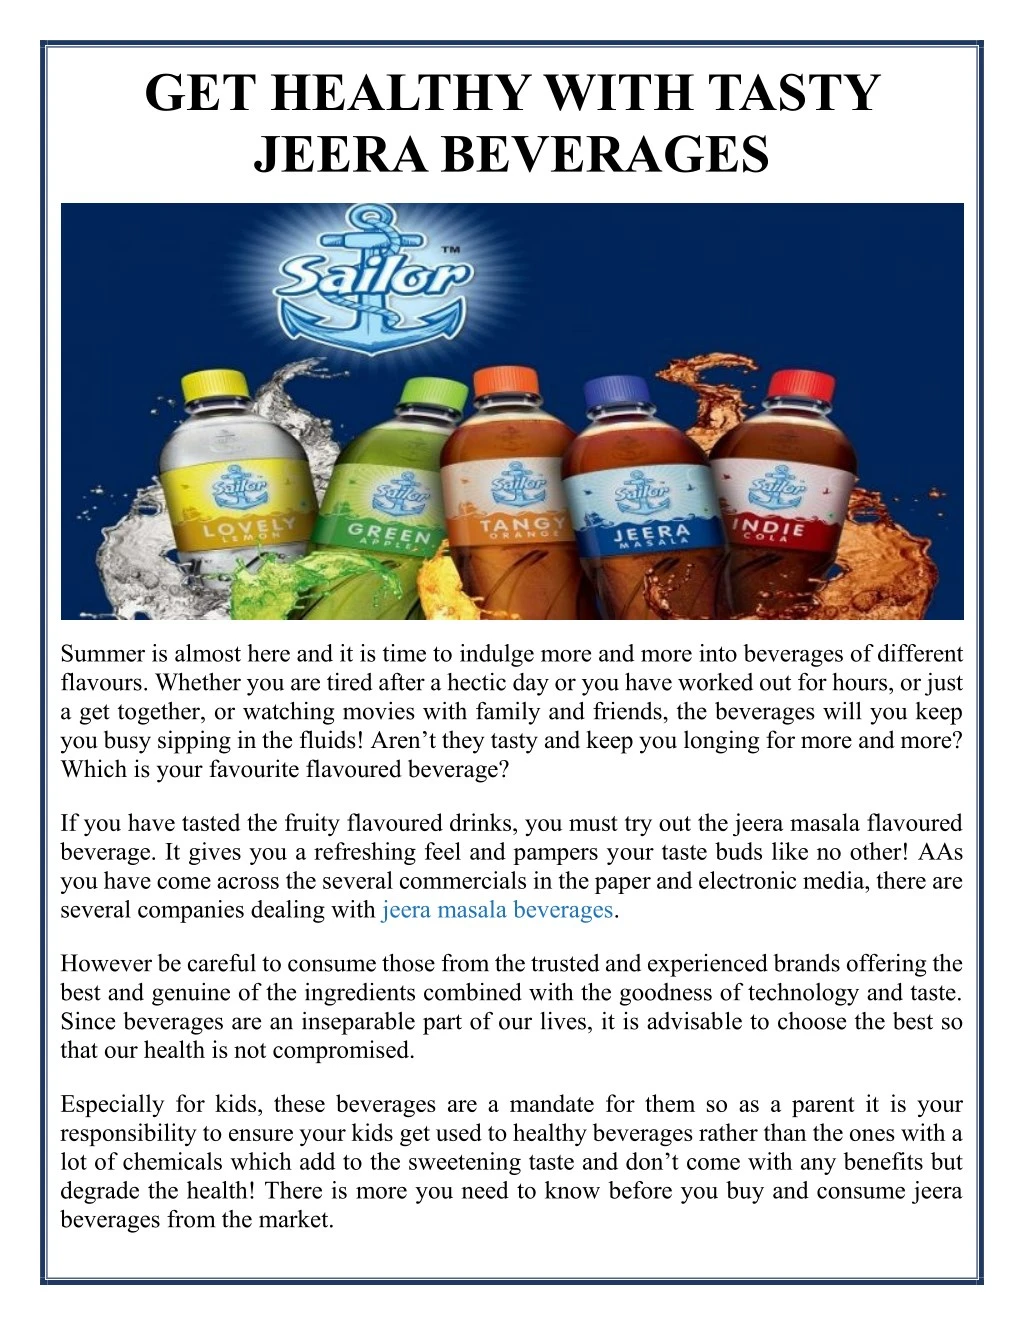 get healthy with tasty jeera beverages